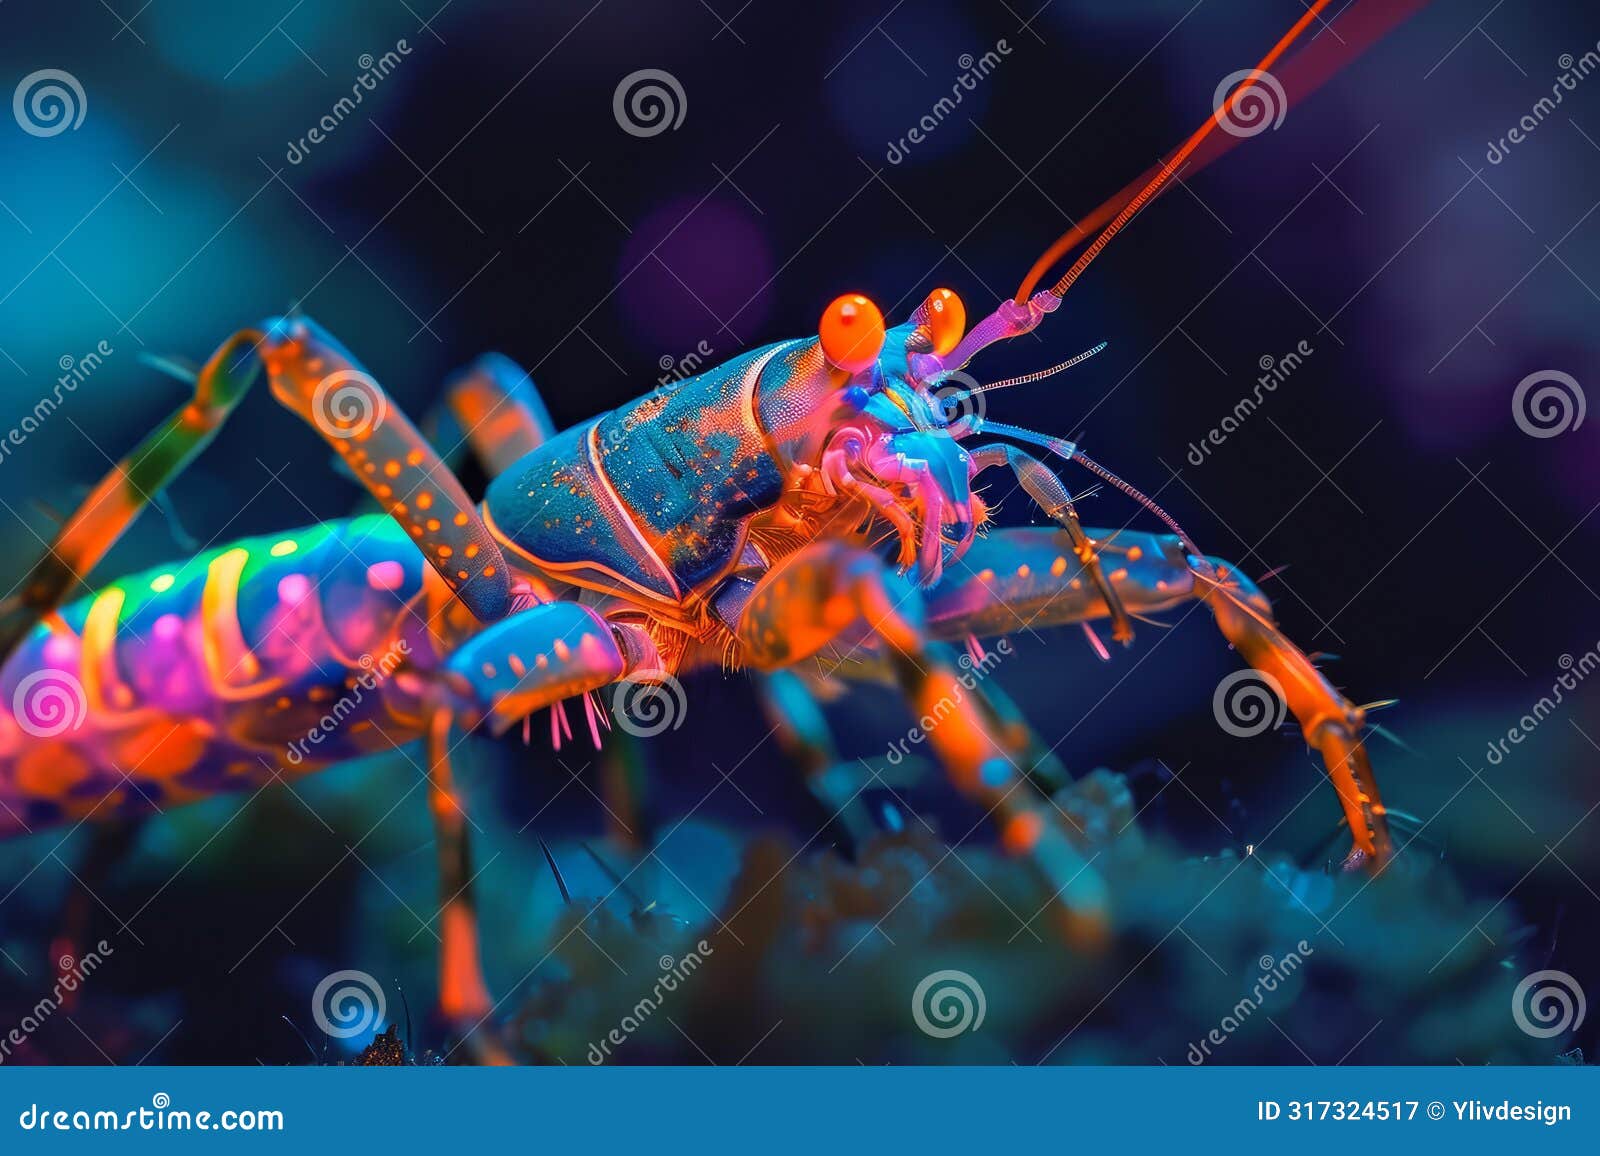 futuristic arthropod antient neon image. generate ai